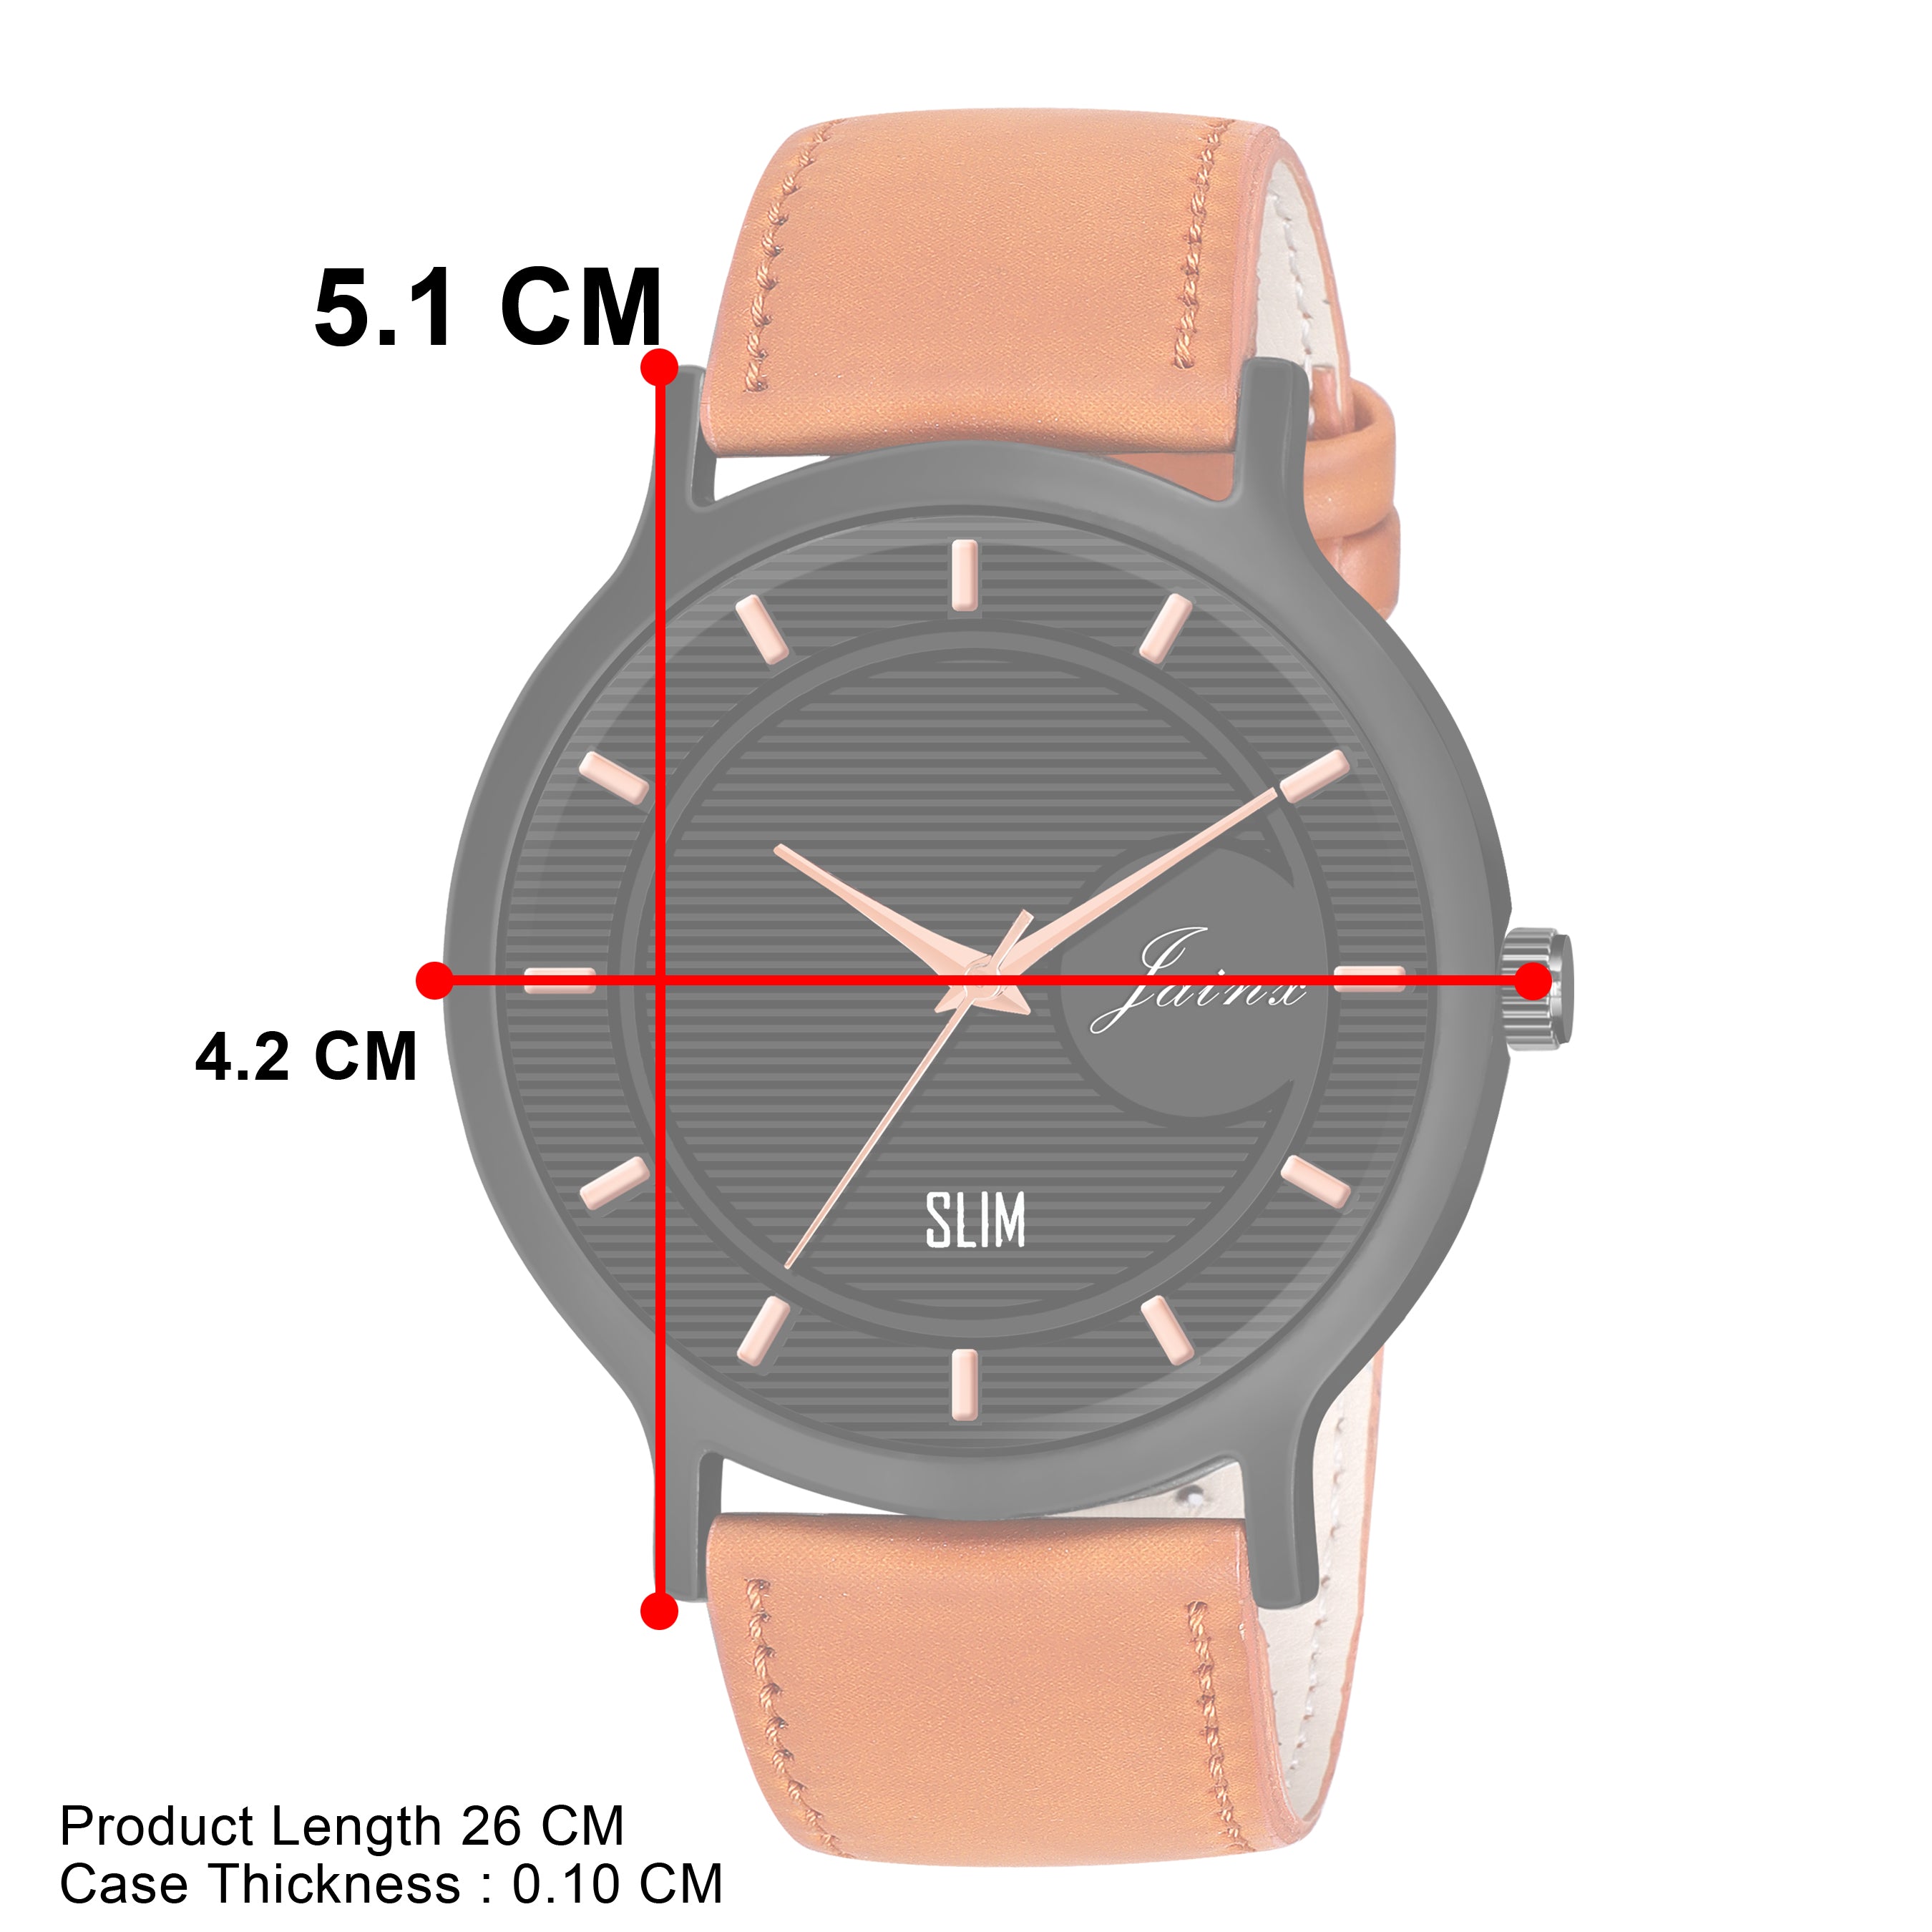 Jainx Slim Black Dial Leather Strap Analog Watch - for Men JM7150 - Jainx Store